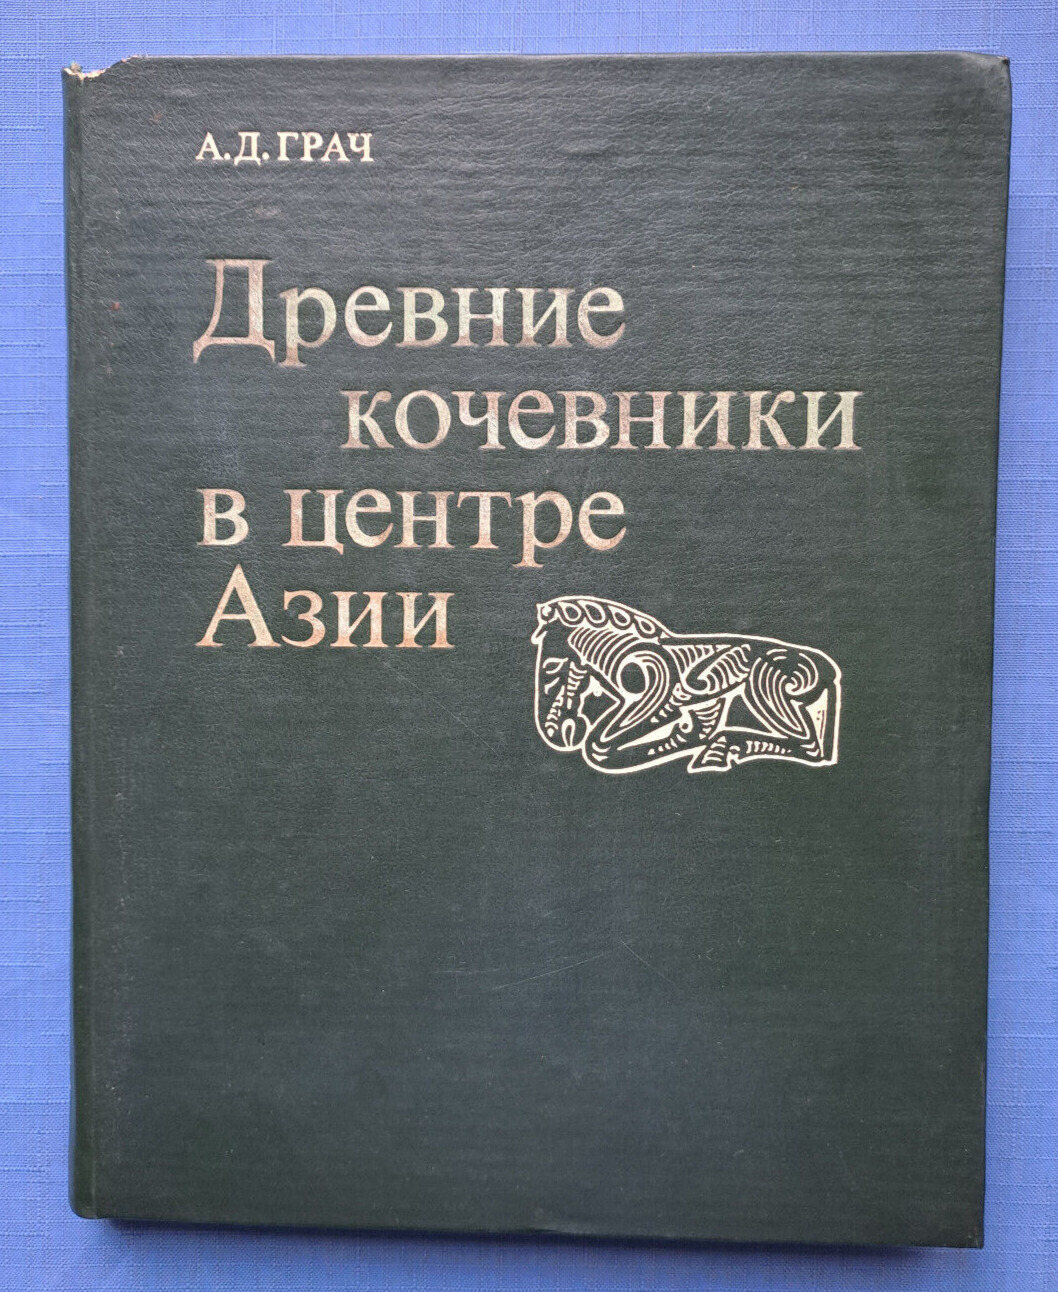 1980 Ancient Nomads Asia Siberia Tuva Mongolia Archeology 2750 pcs Russian book